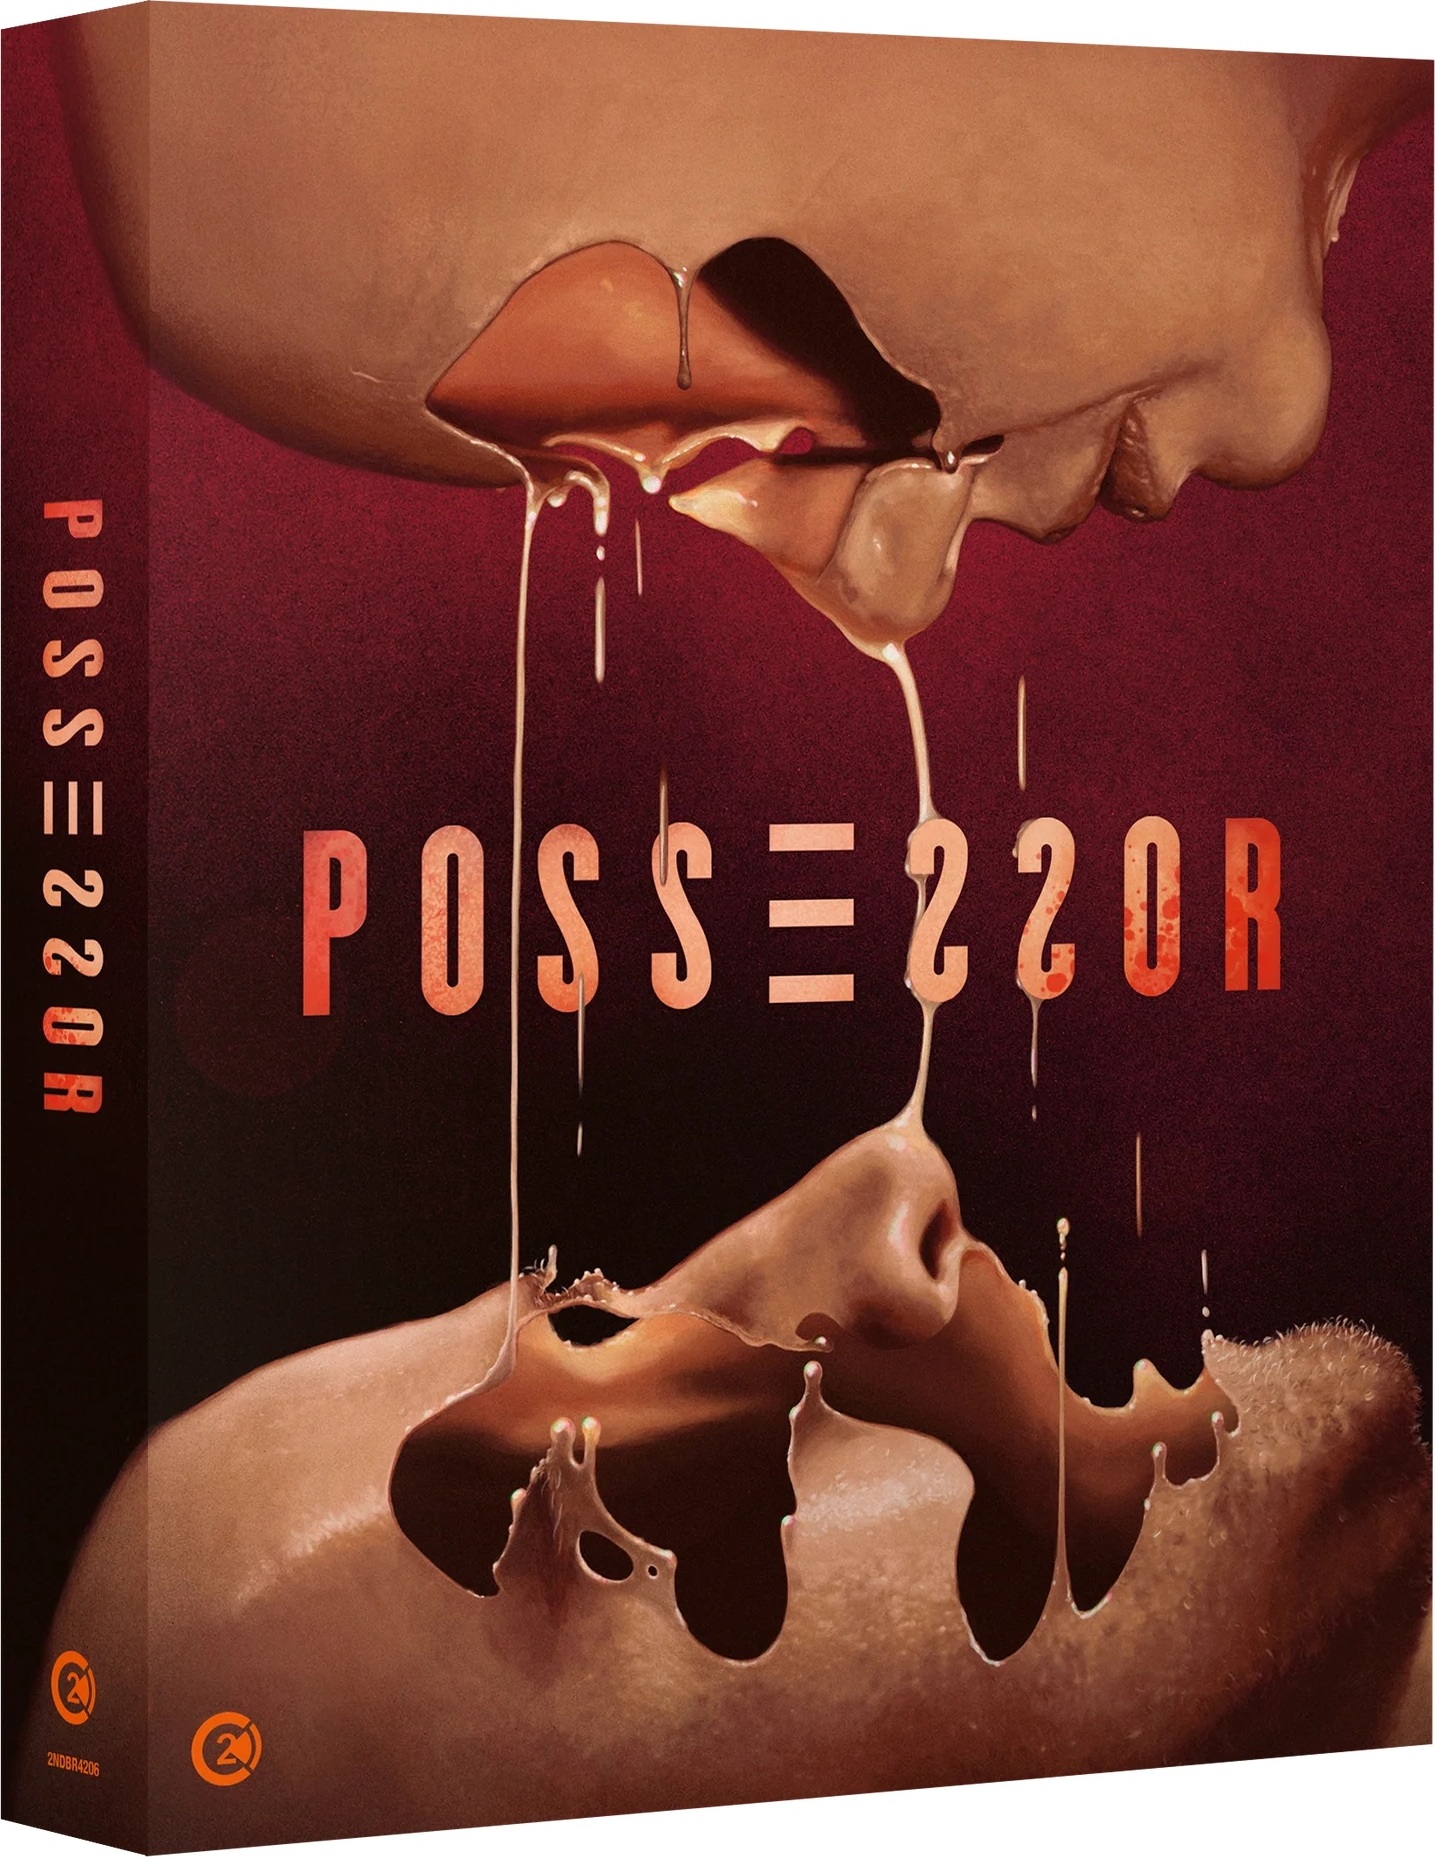 Possessor Blu-ray Review